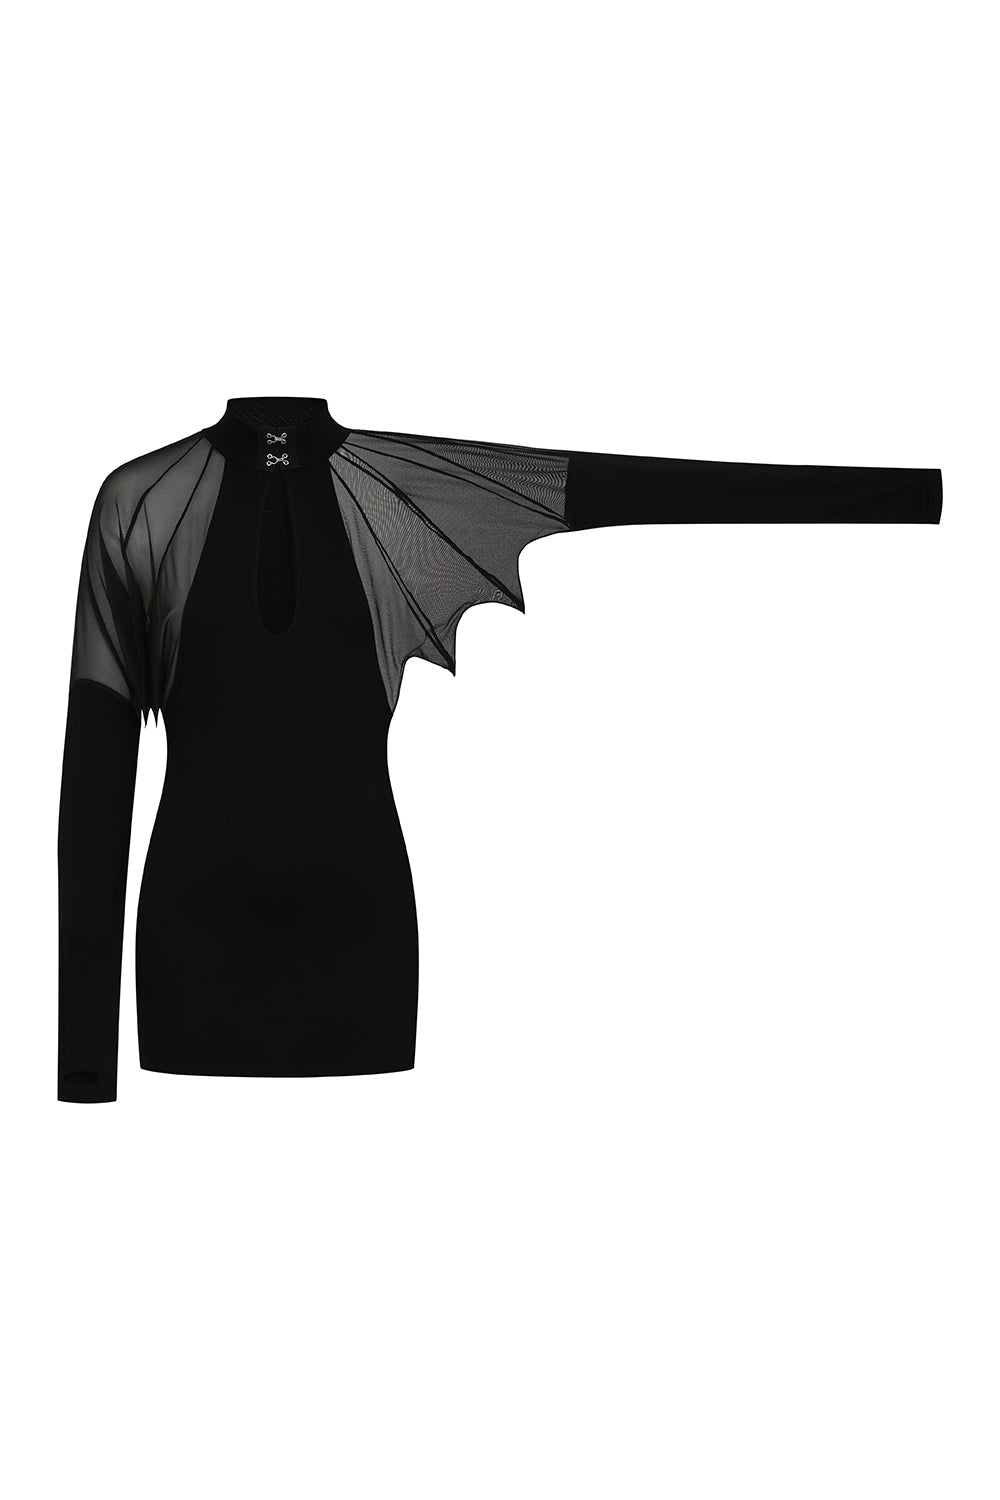 Necessary Evil Vespertilio Long Sleeve Bat Wings Effect Batwing Top - Kate's Clothing